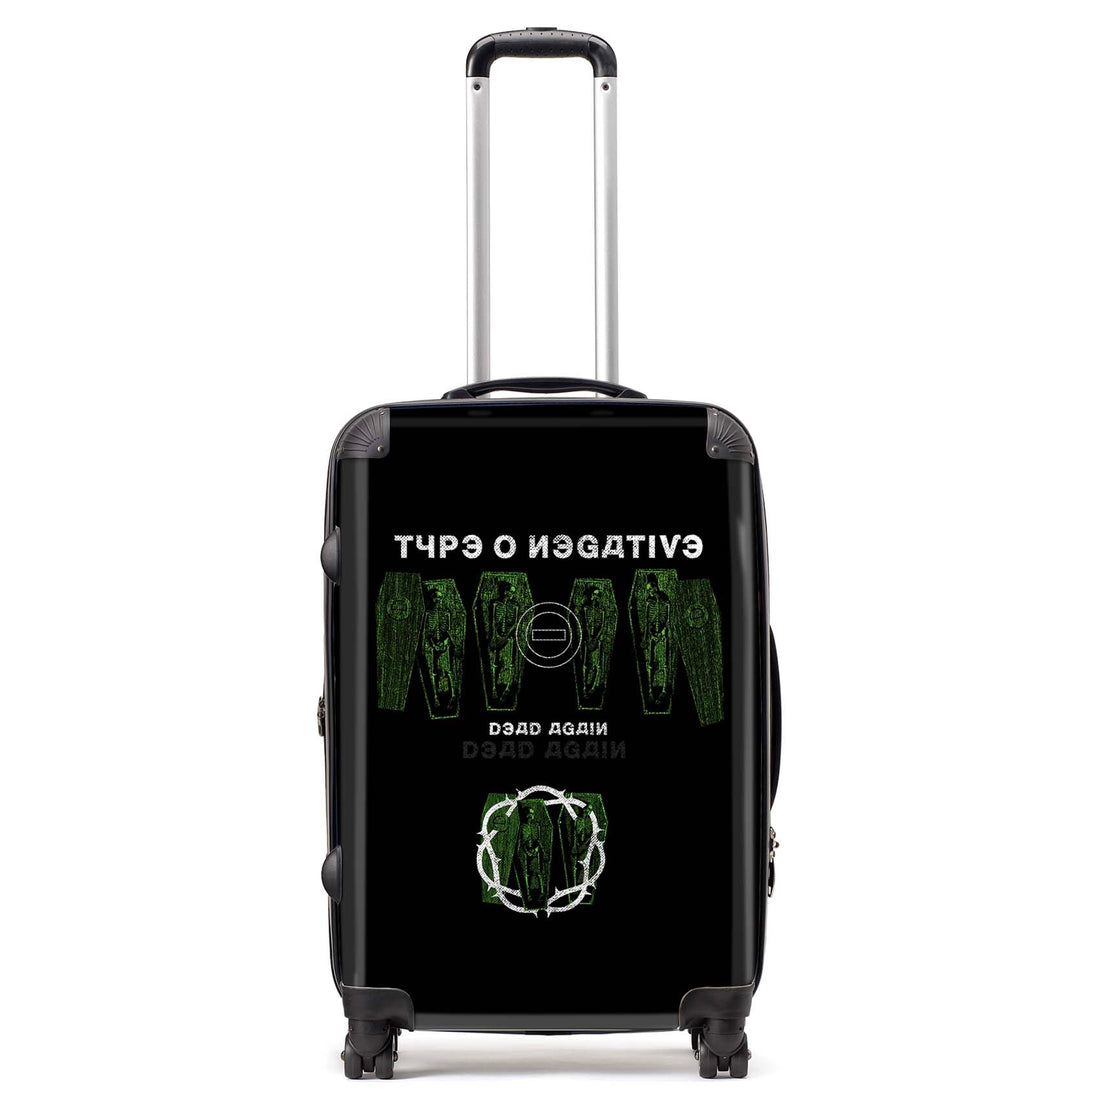 Rocksax Type O Negative Travel Bag Luggage - Dead Again